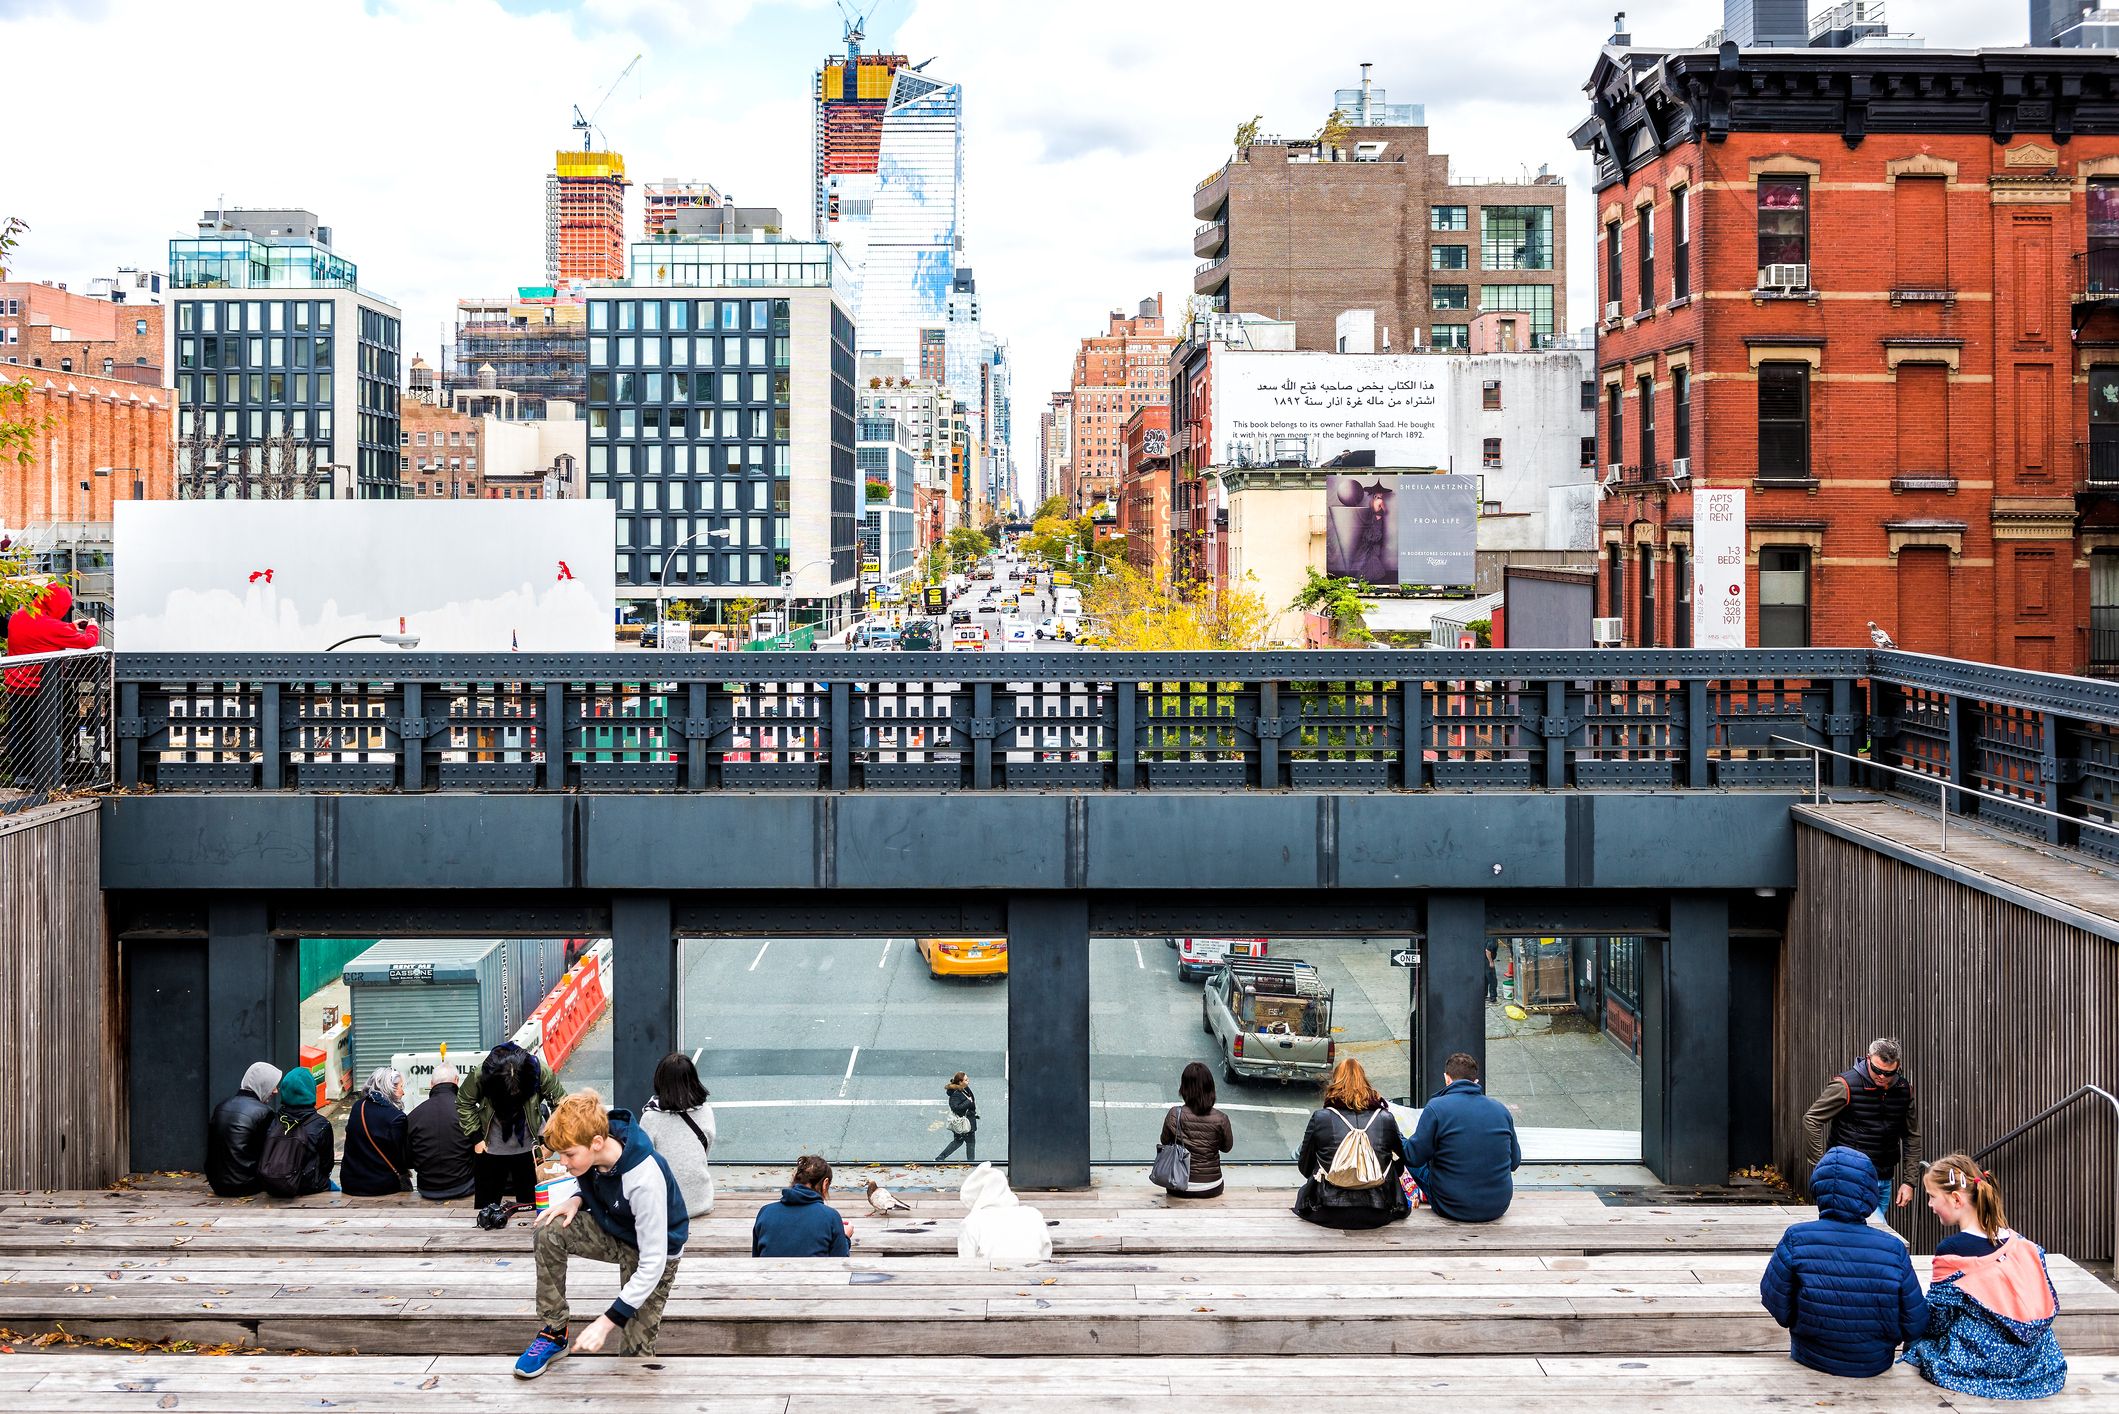 The High Line Address